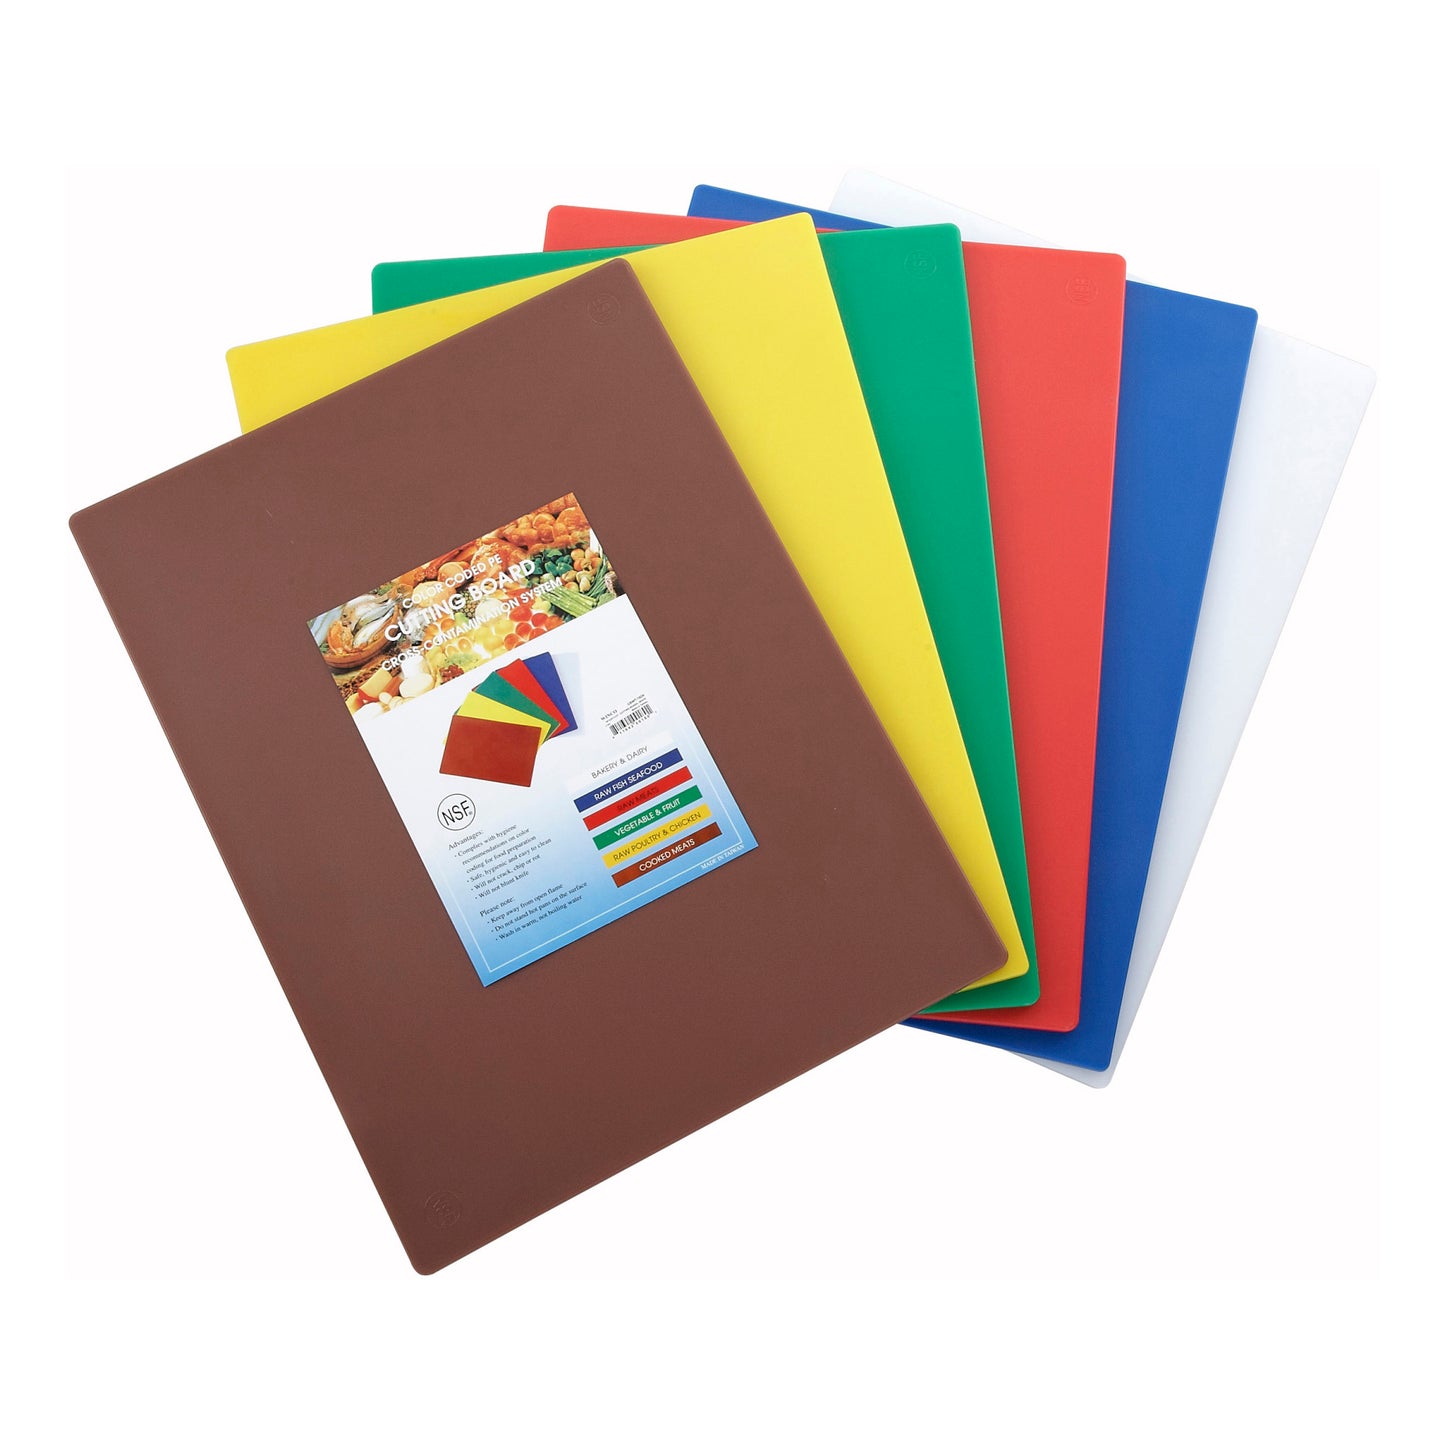 CBST-1824 - Cutting Boards, Set of 6 Colors - 18 x 24 x 1/2